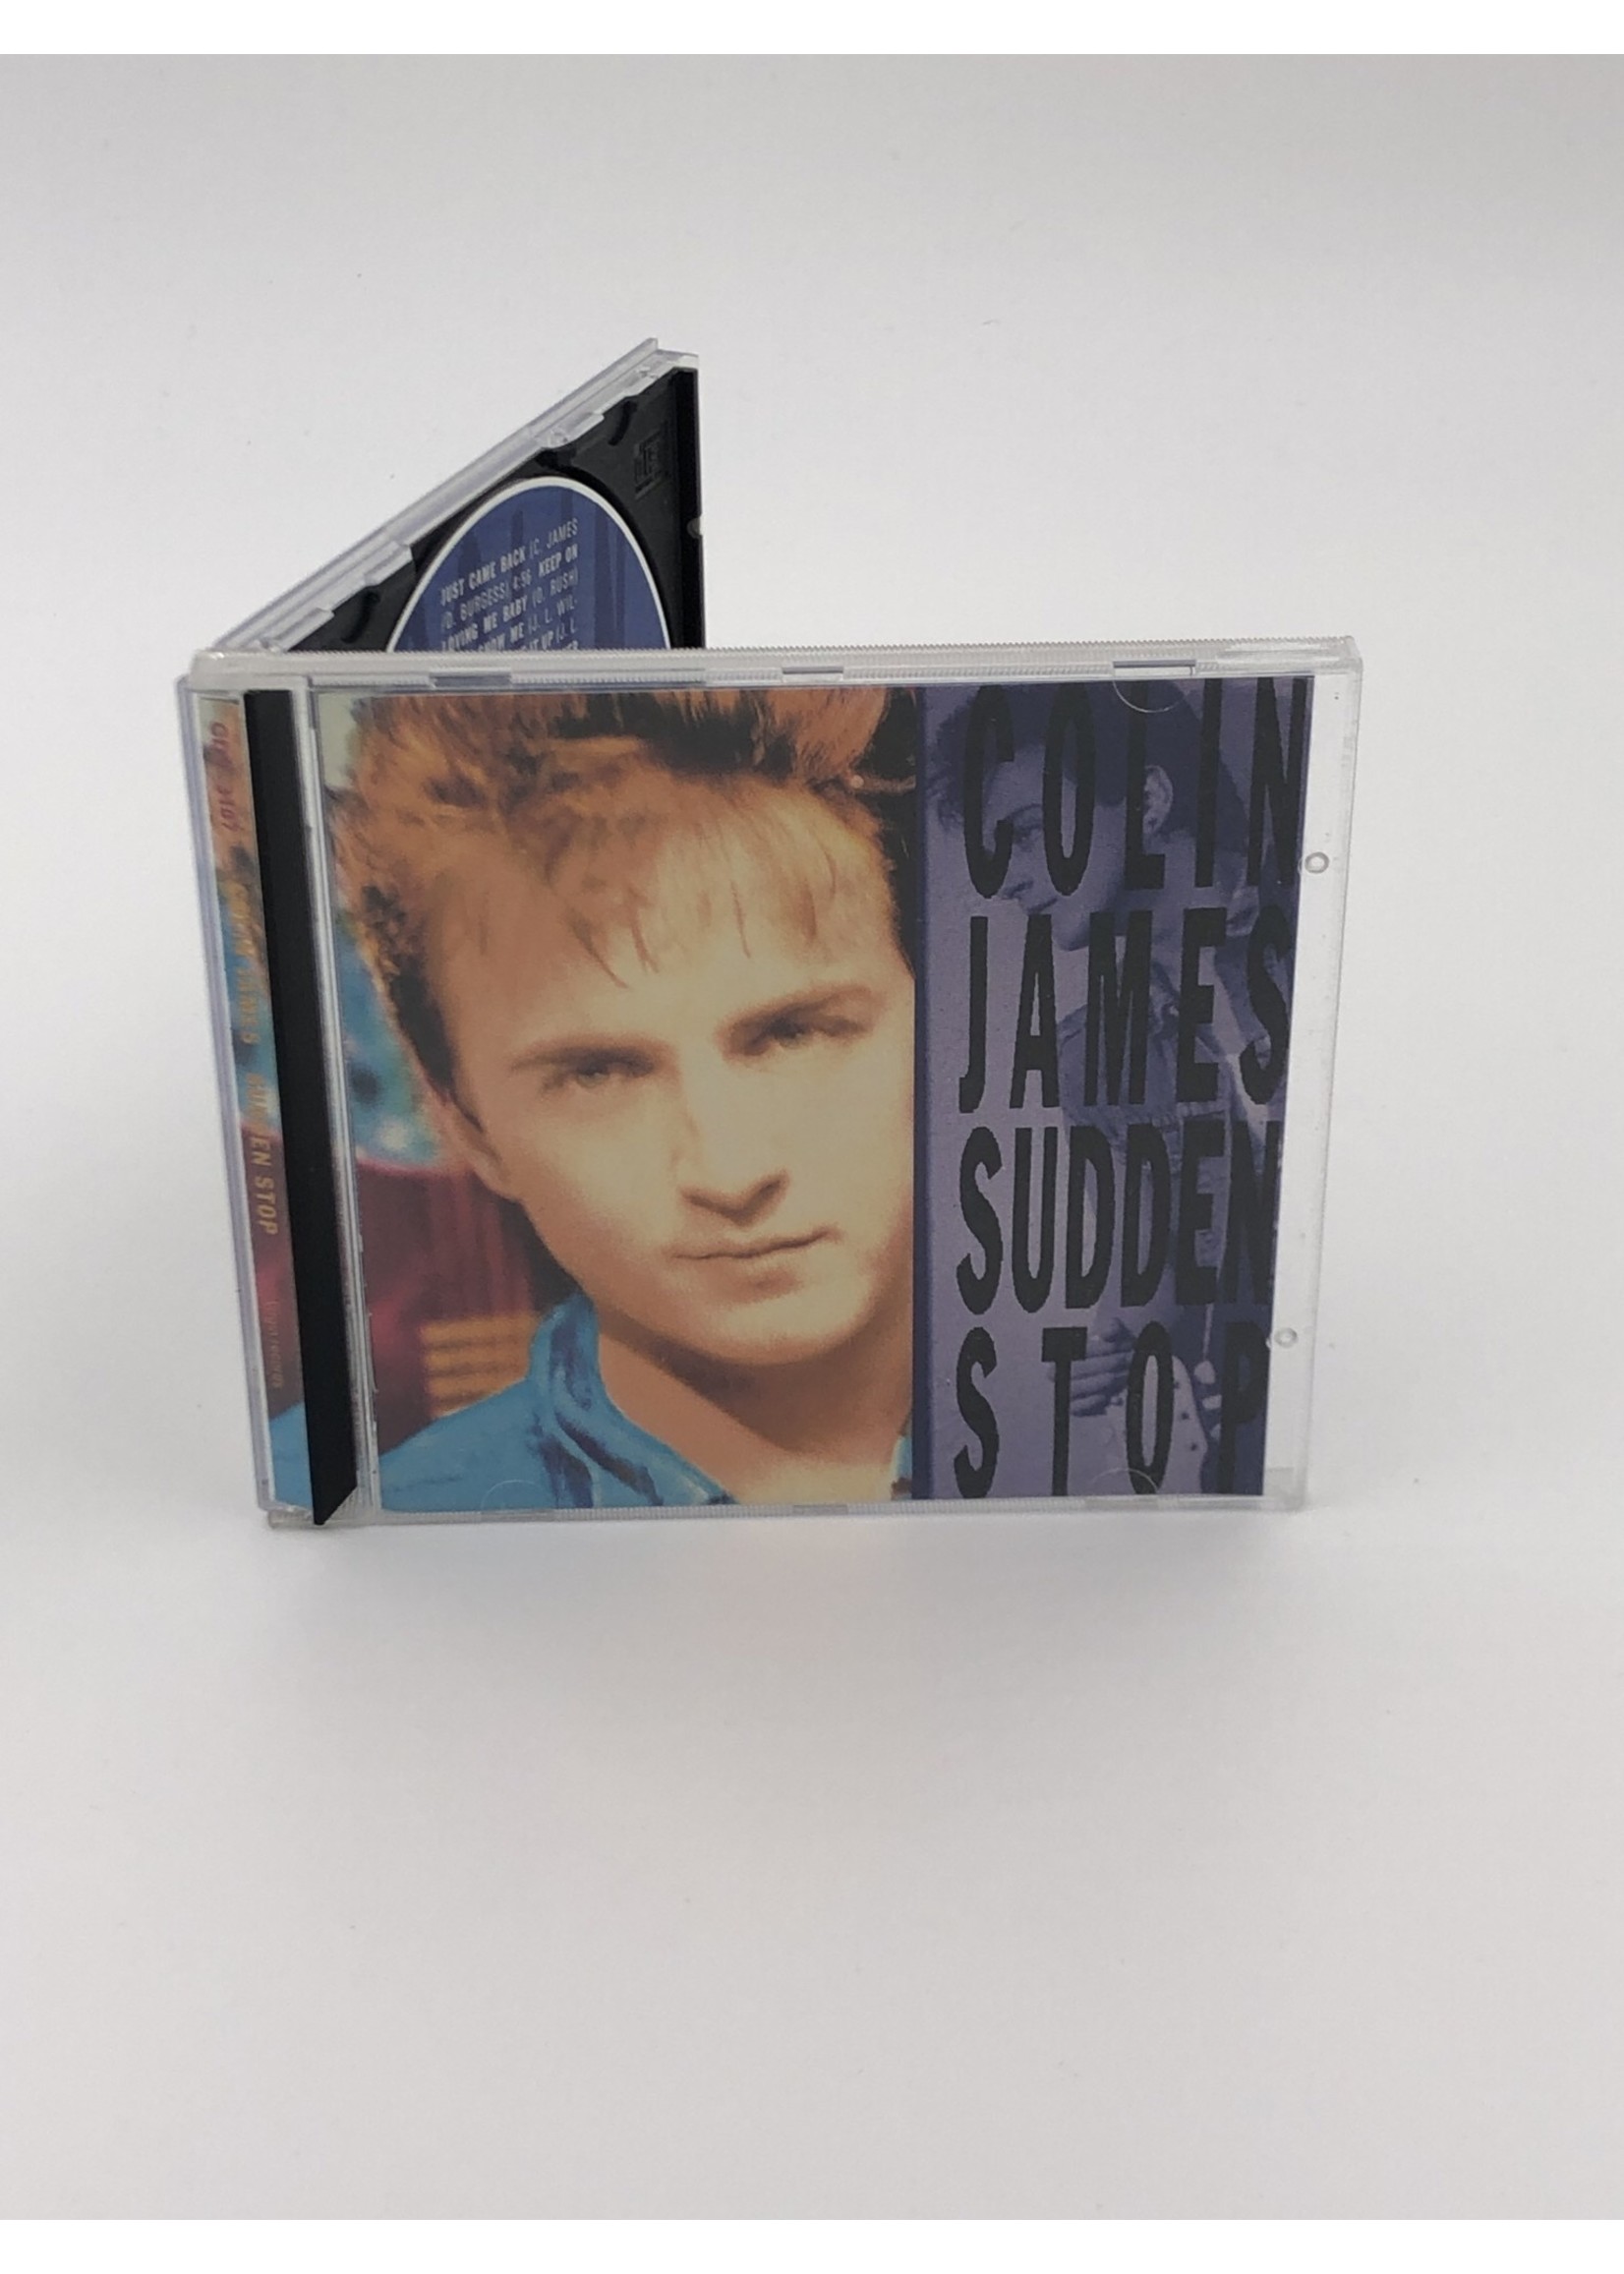 CD Colin James Sudden Stop CD